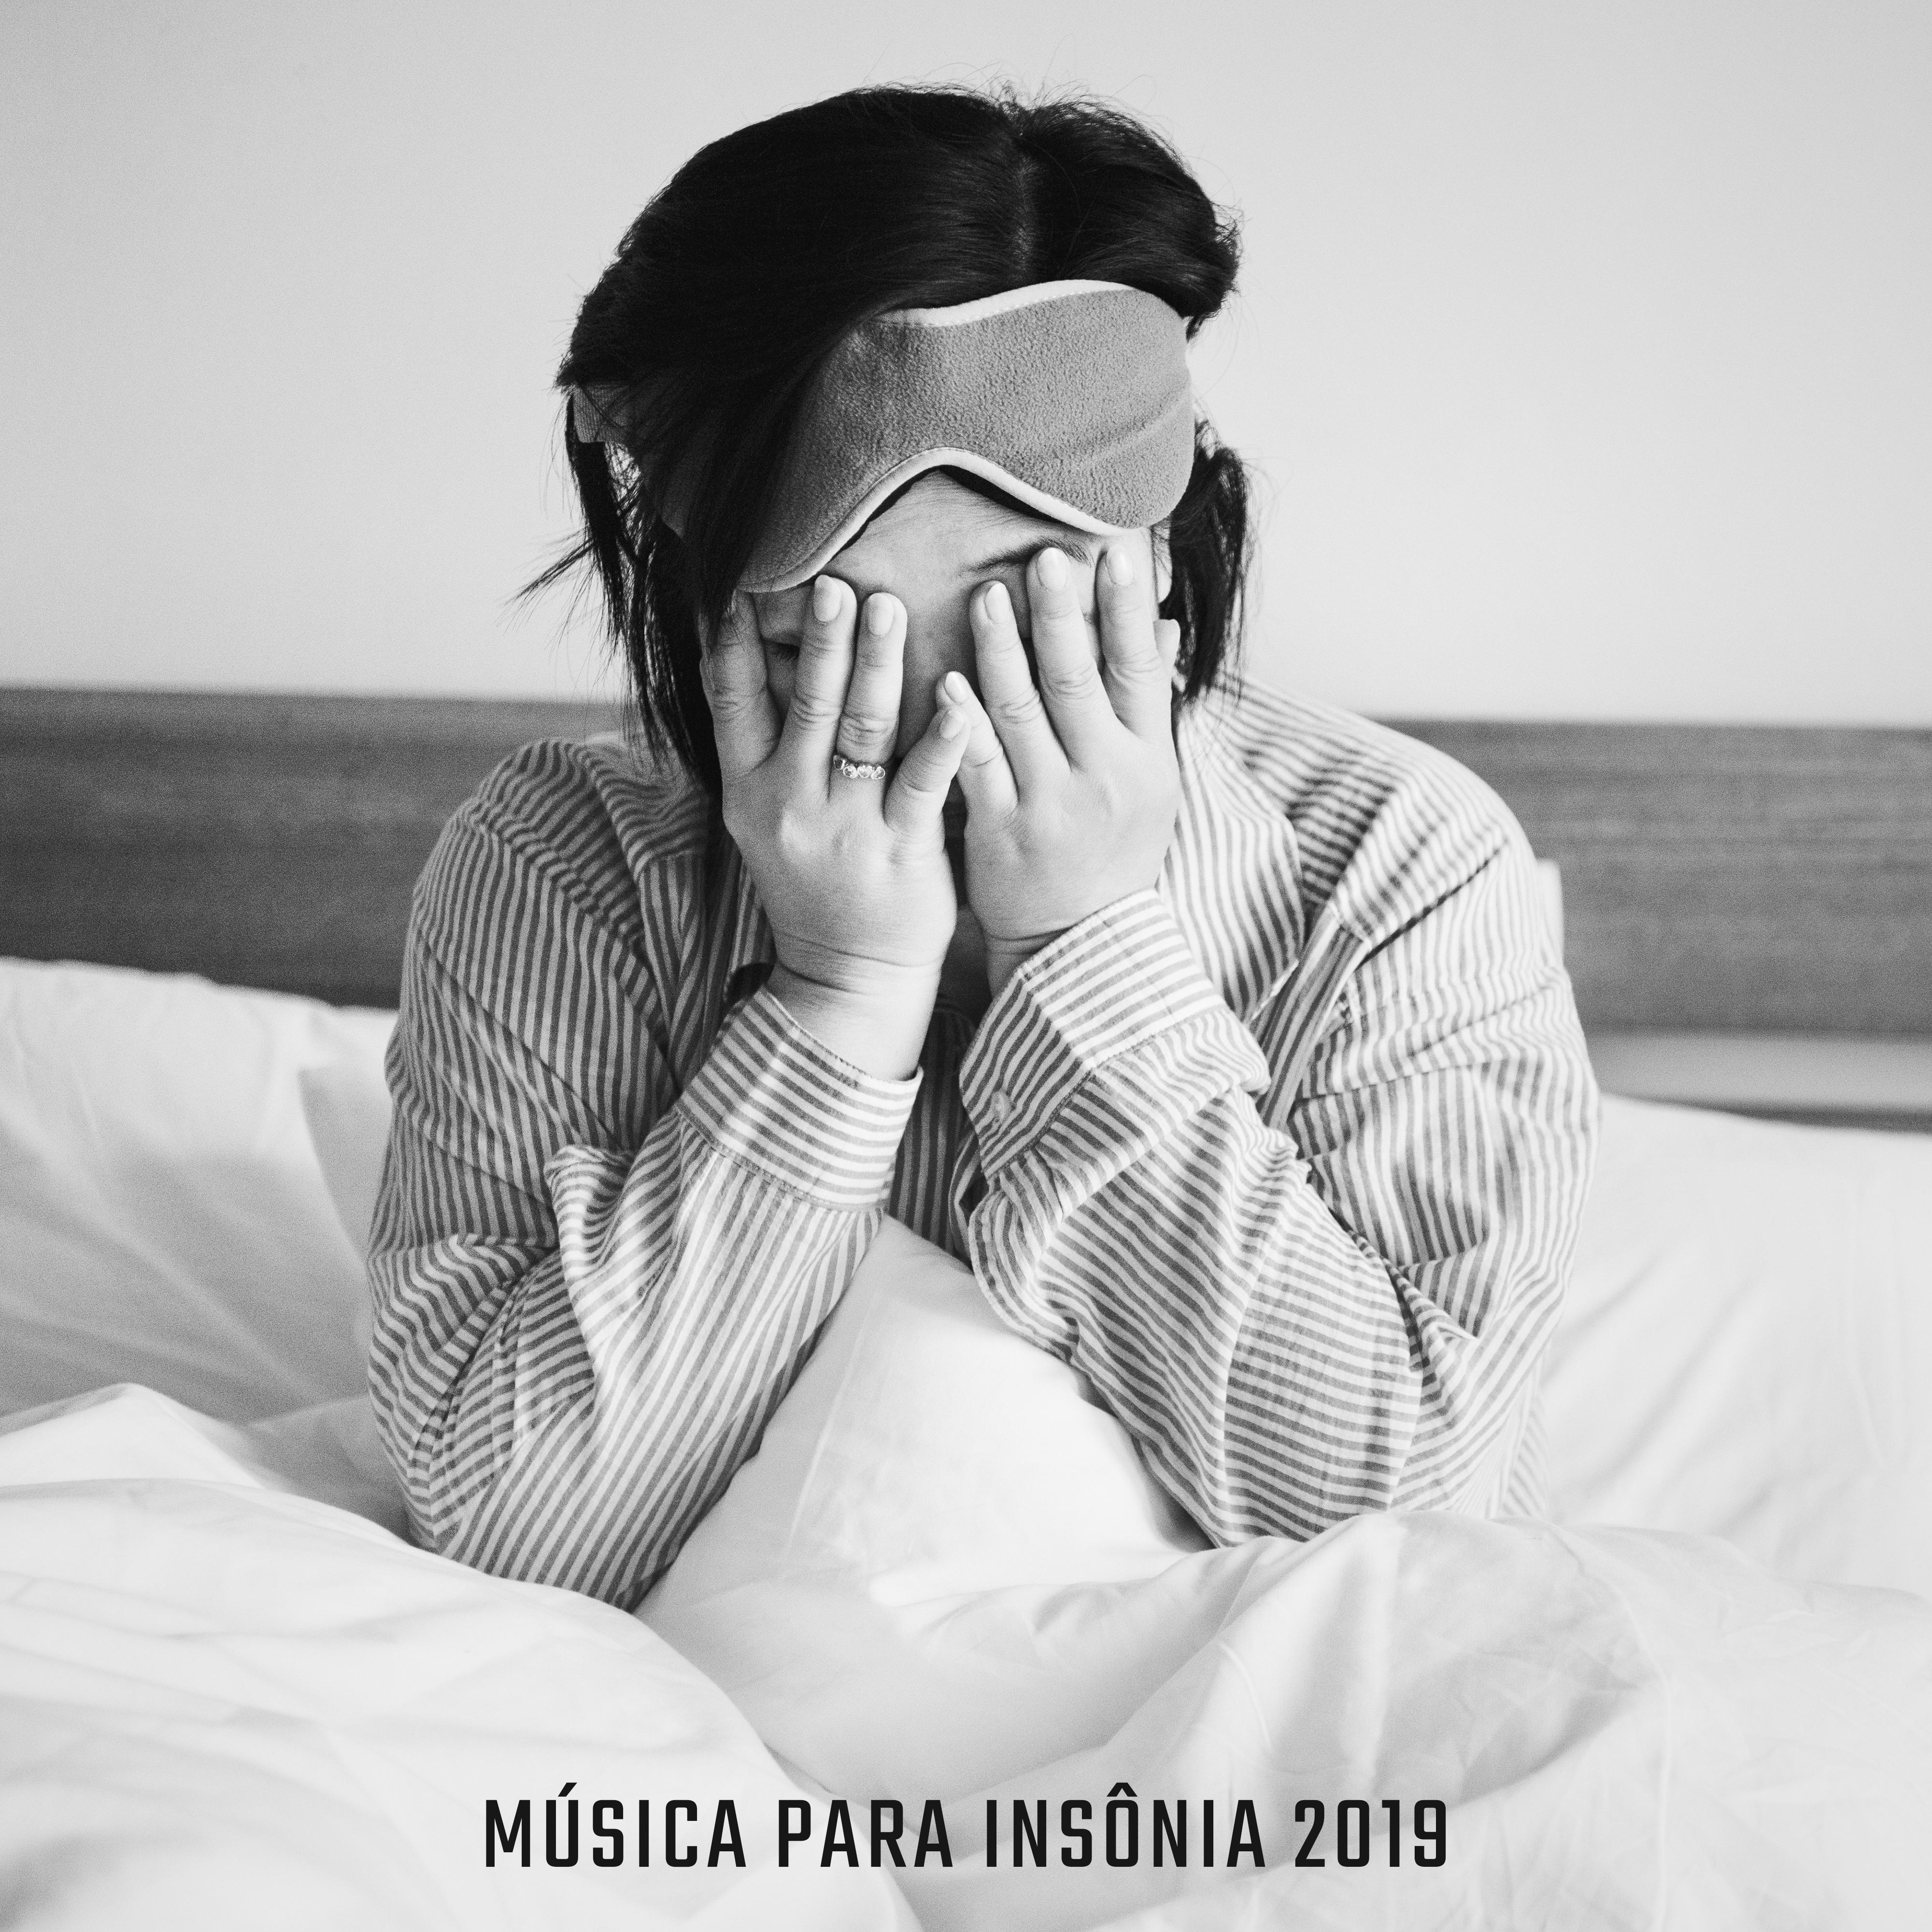 Música para Insônia 2019: Música de cura para Dormir, Relaxamento, Zen, Mente Pura, Sono Profundo